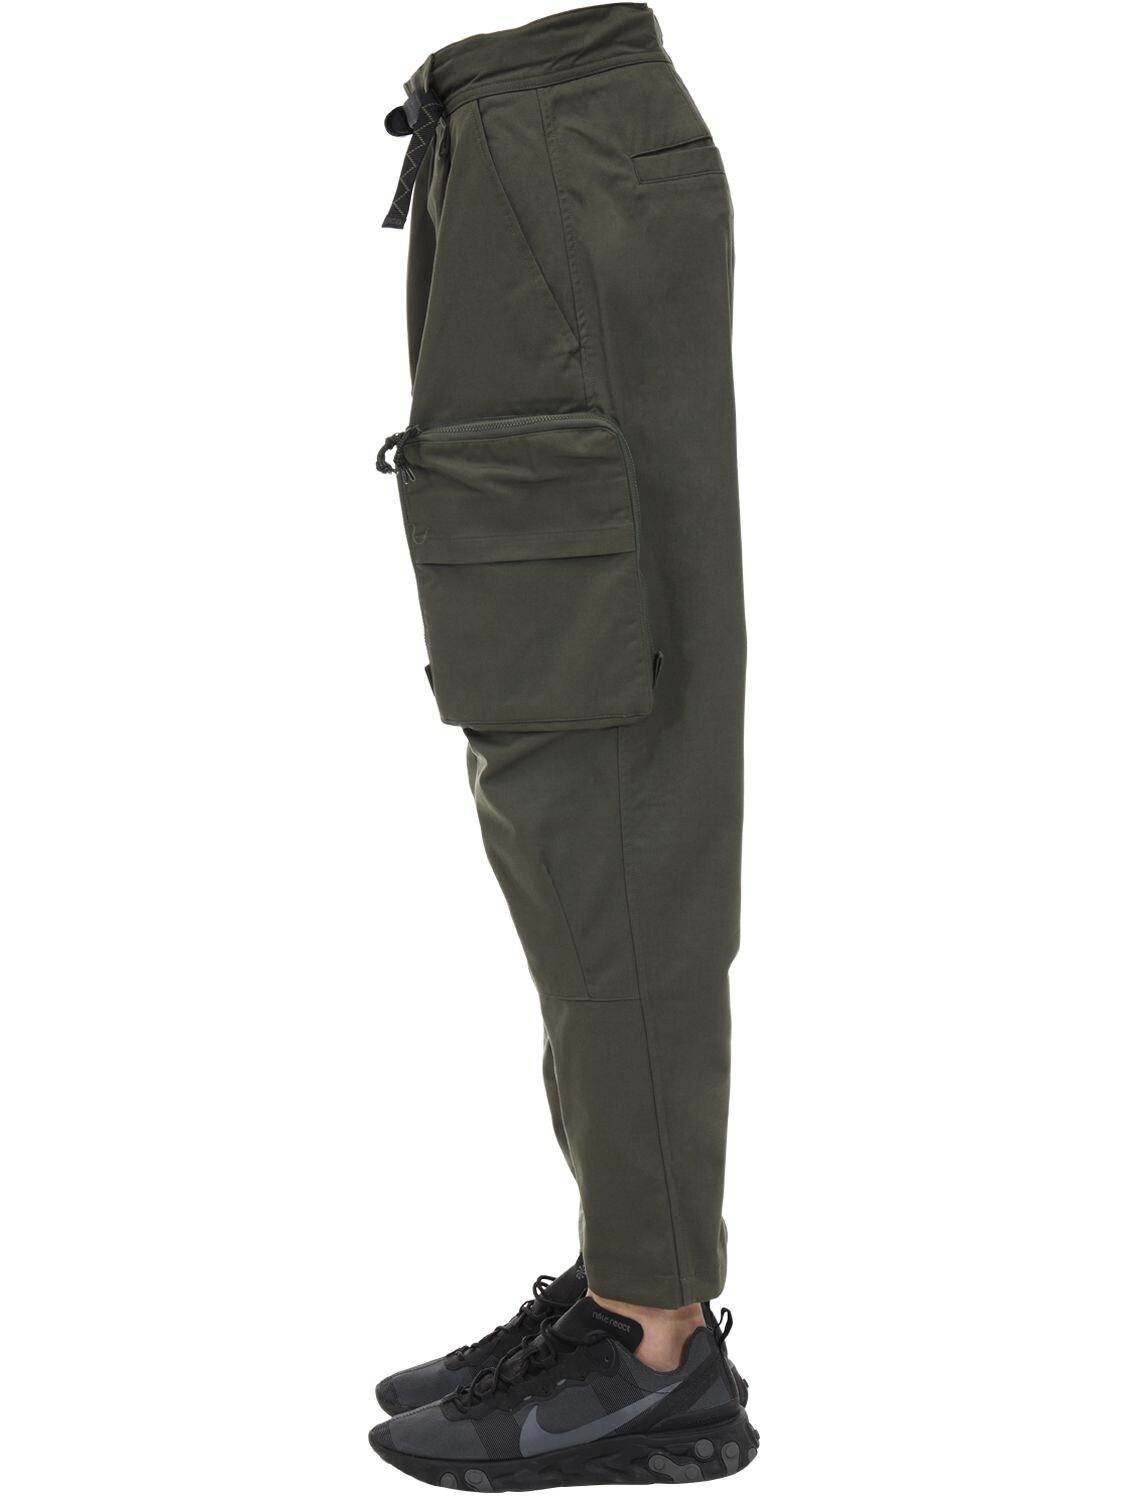 Nike Acg Cotton Blend Cargo Pants in Cargo Khaki (Green) for Men - Lyst